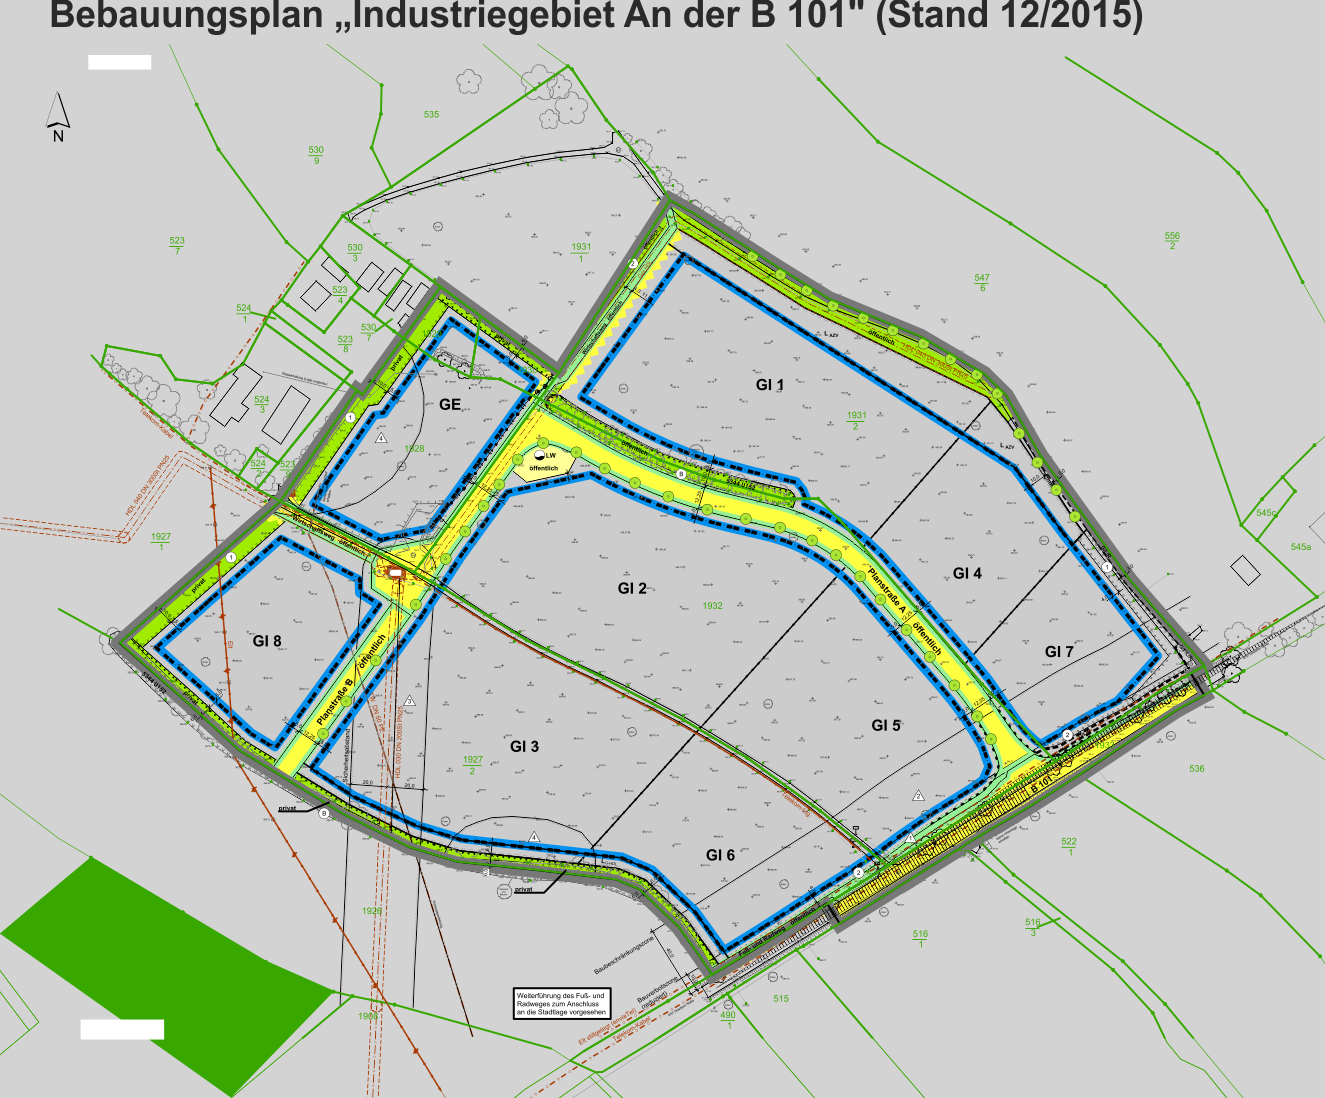 Quelle: www.annaberg-buchholz.de -> Stadtleben -> Planen, Bauen & Wohnen -> Planungsrecht/ Bebauungs